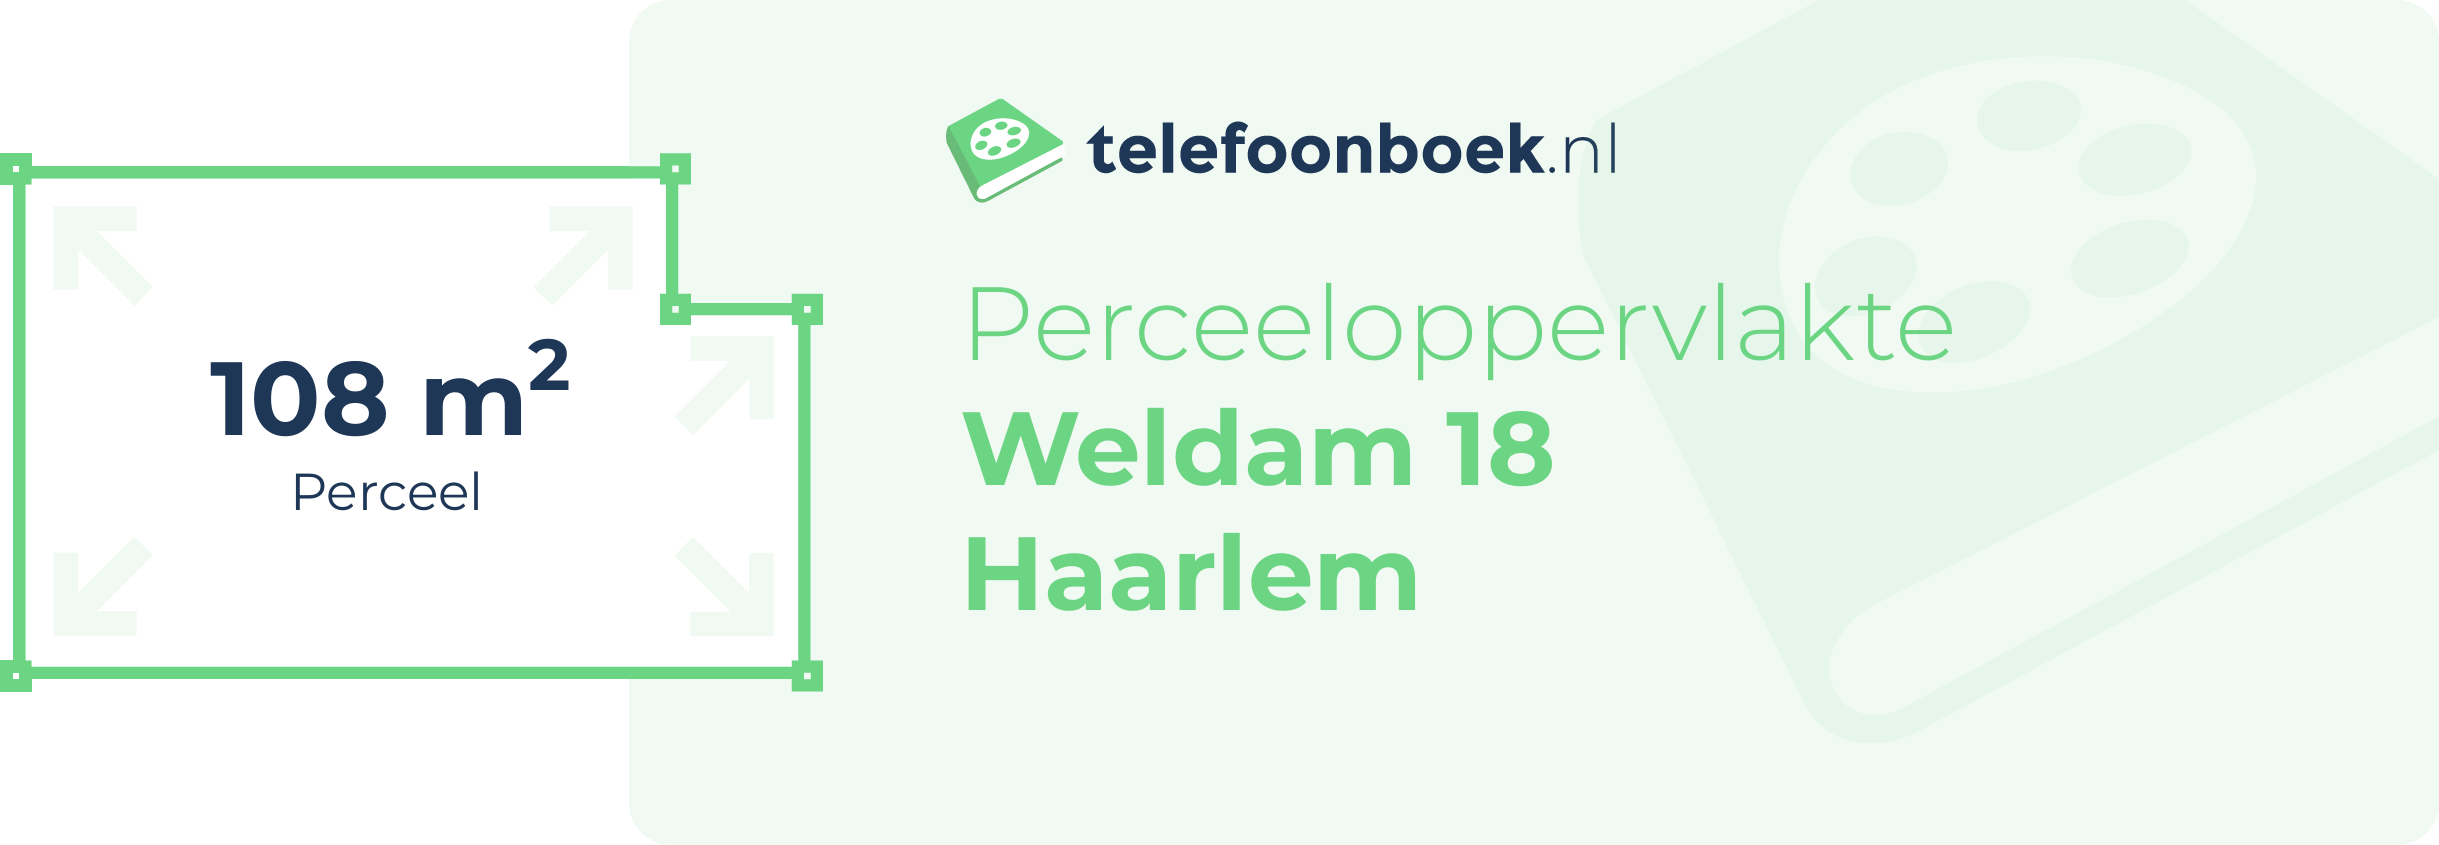 Perceeloppervlakte Weldam 18 Haarlem